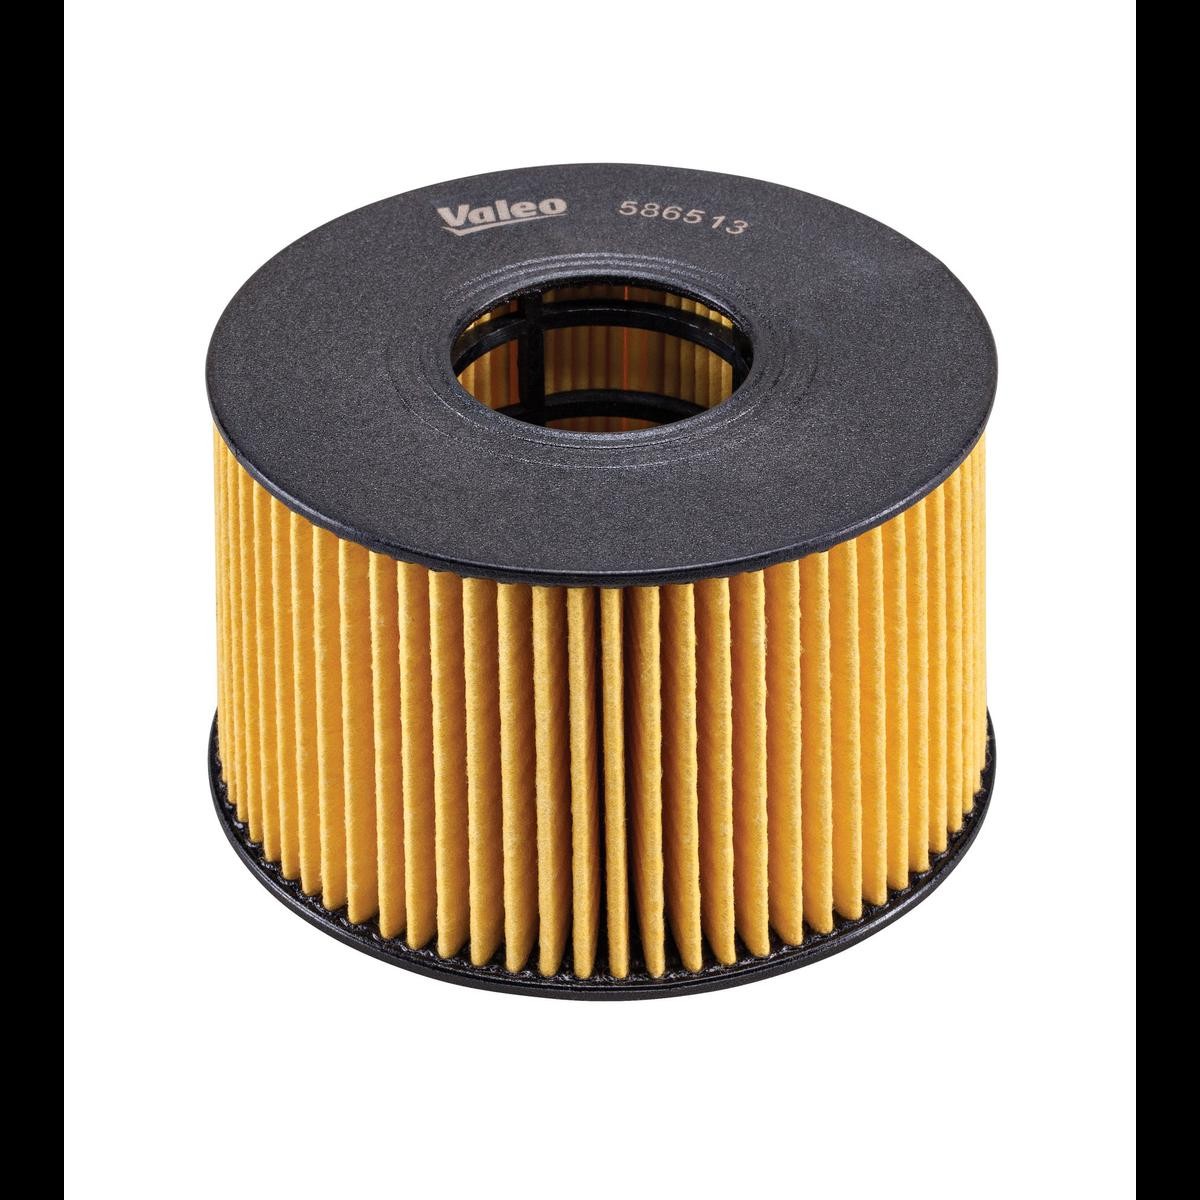 VALEO 586513 Oil filter with seal, Filter Insert